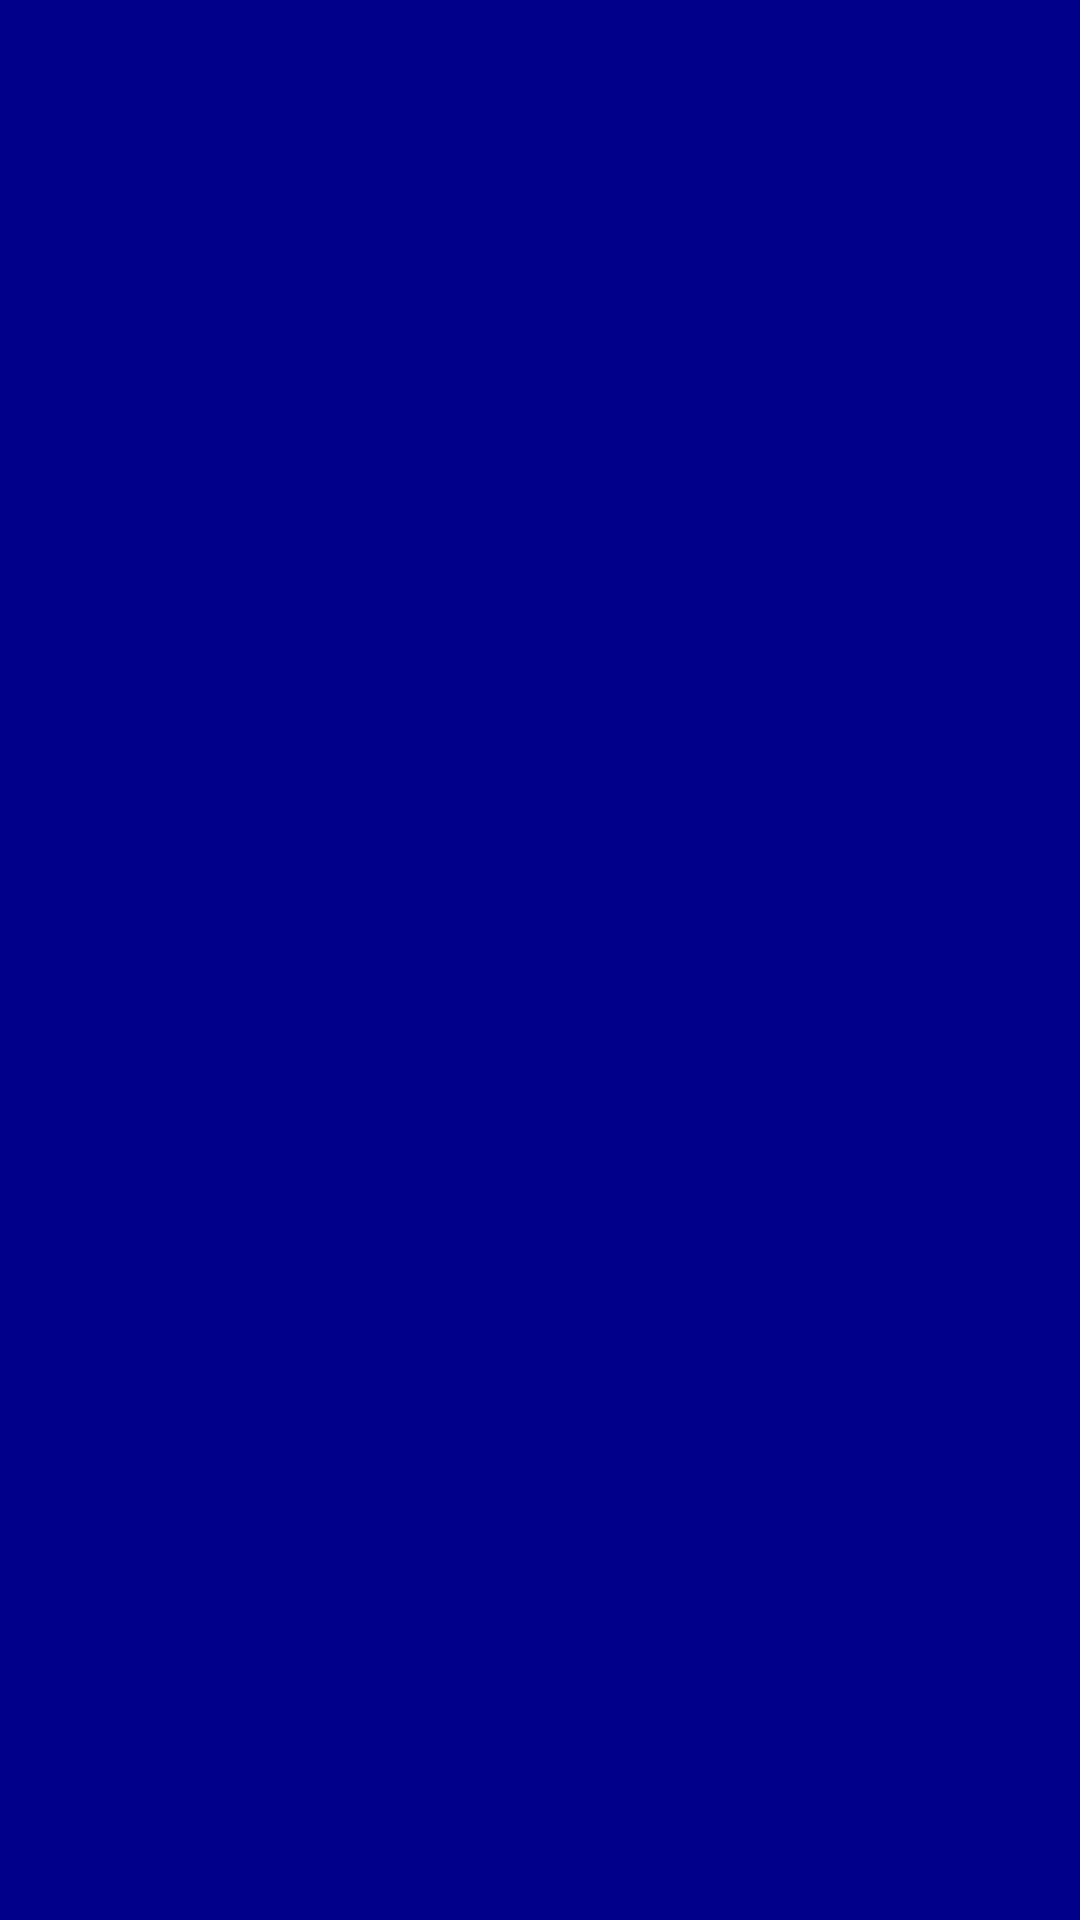 1080x19 Dark Blue Solid Color Background